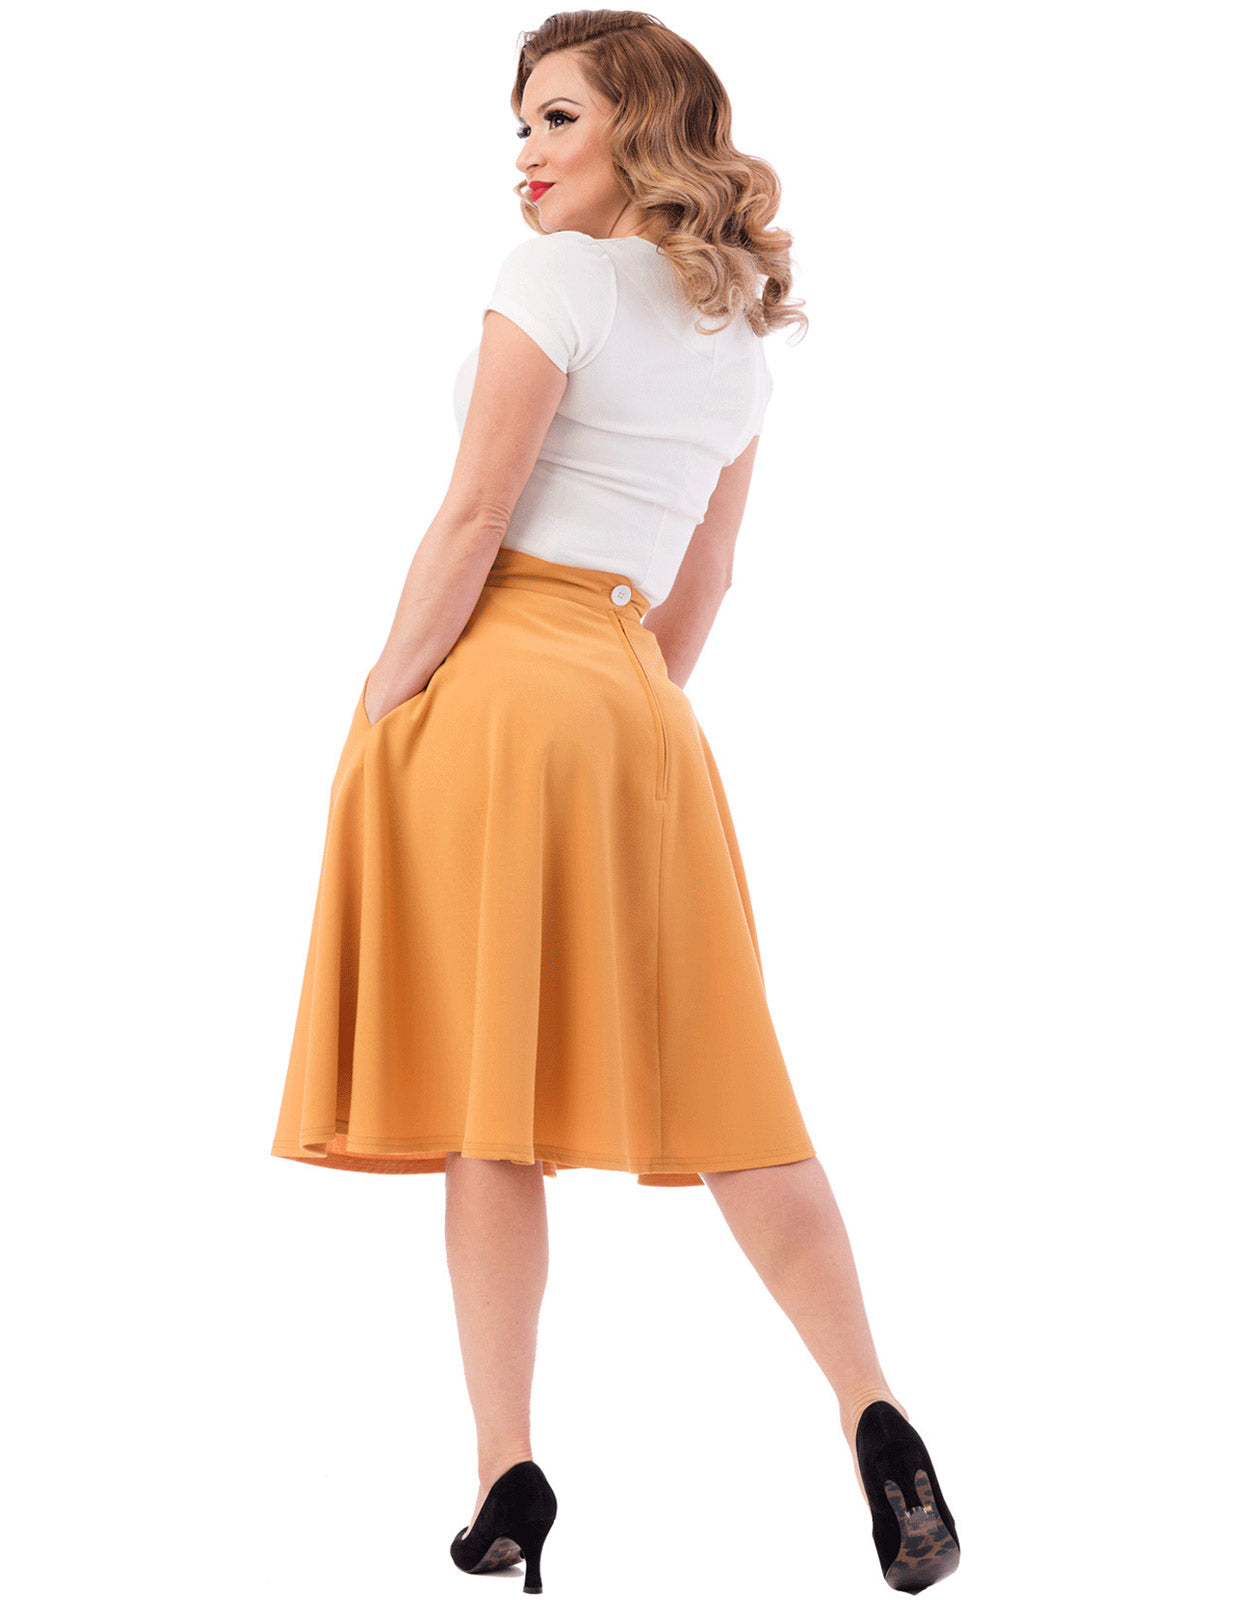 Pocket Circle Skirt in Mustard